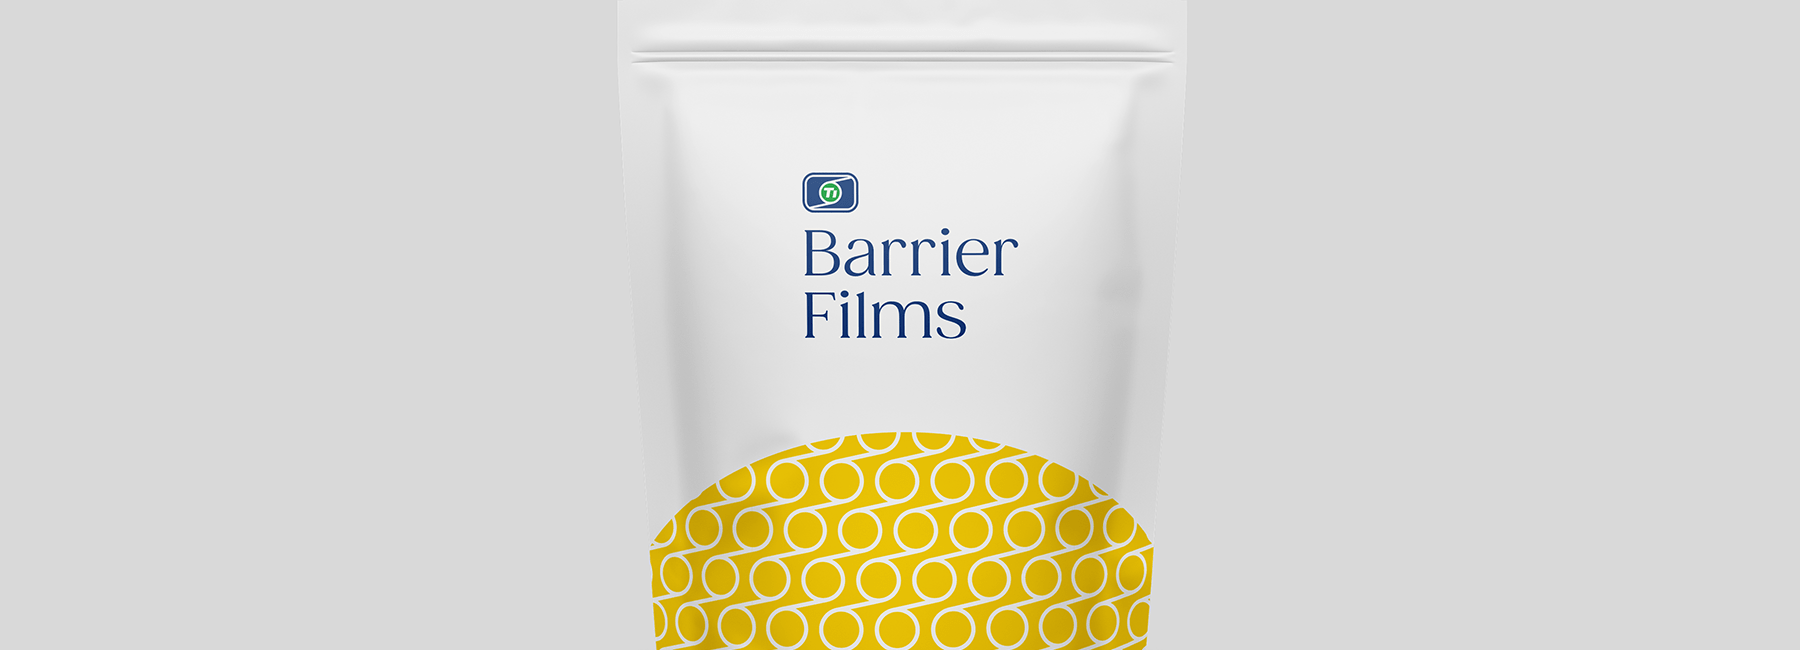 Barrier Films